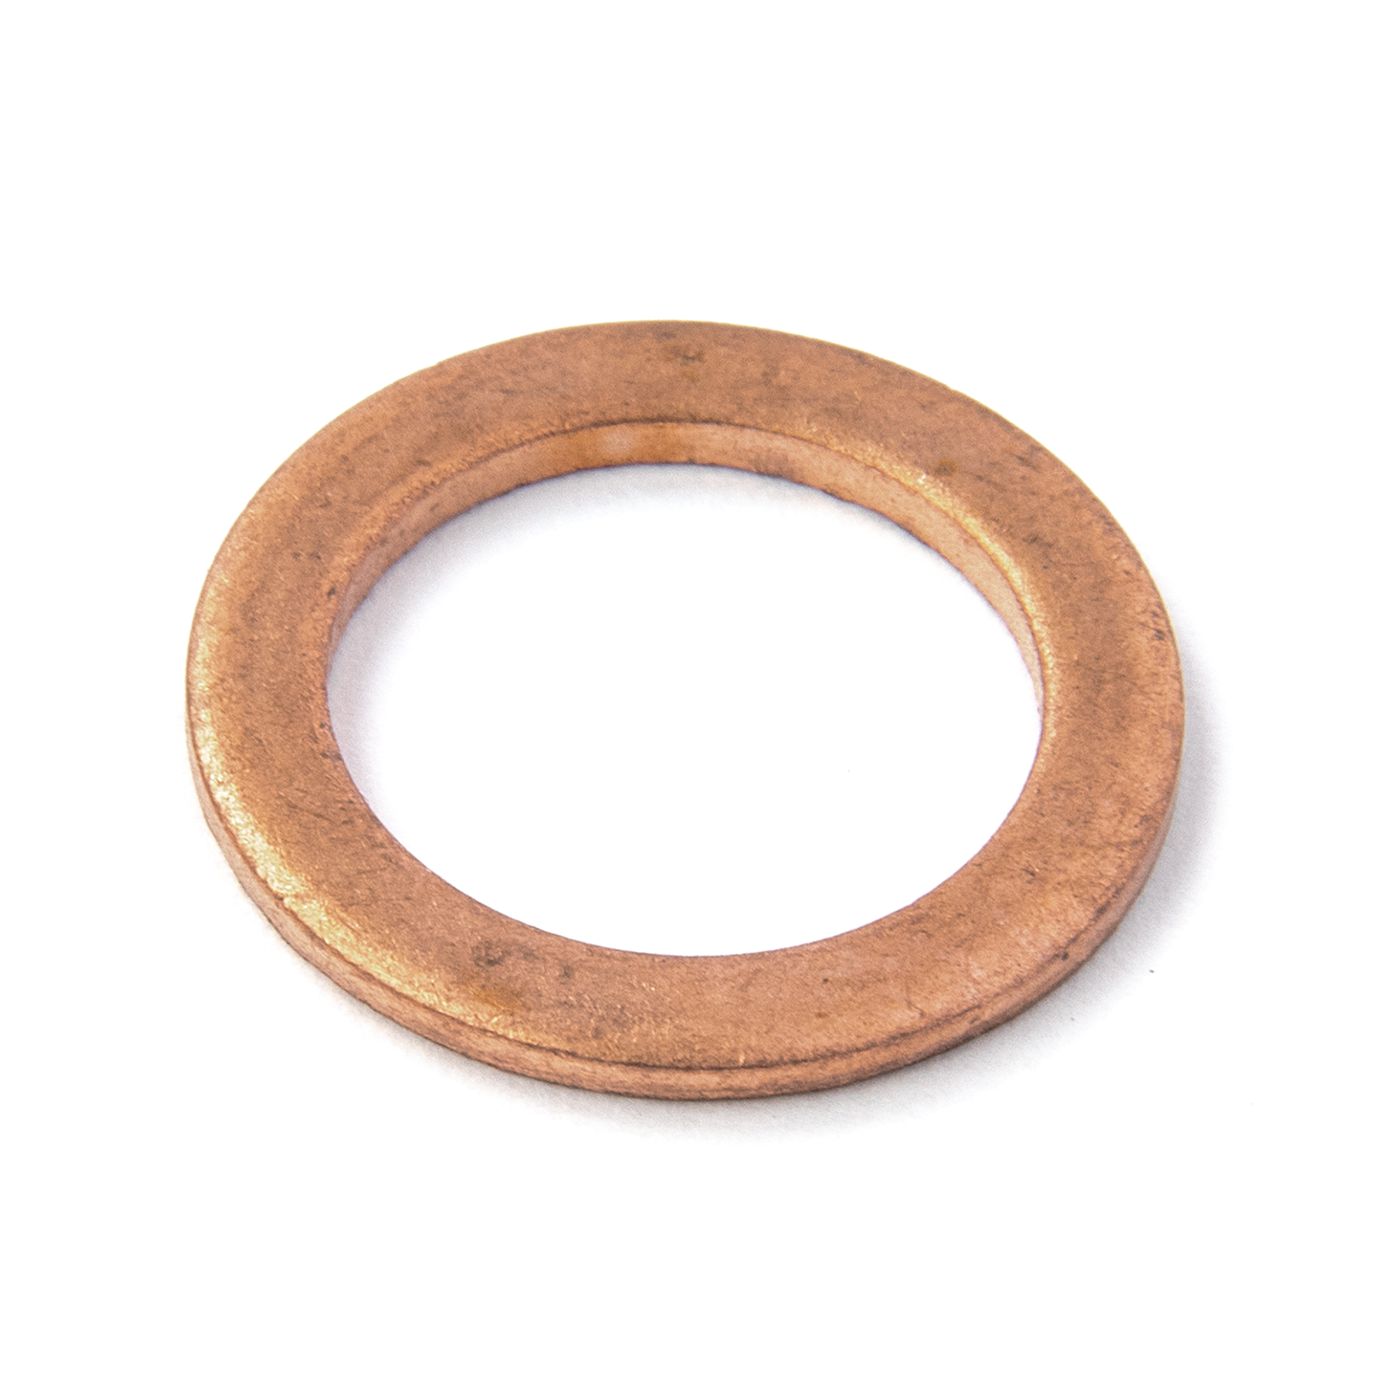 Kupferscheibe
Copper washer
Rondelle en cuivre
Podkładka uszcze